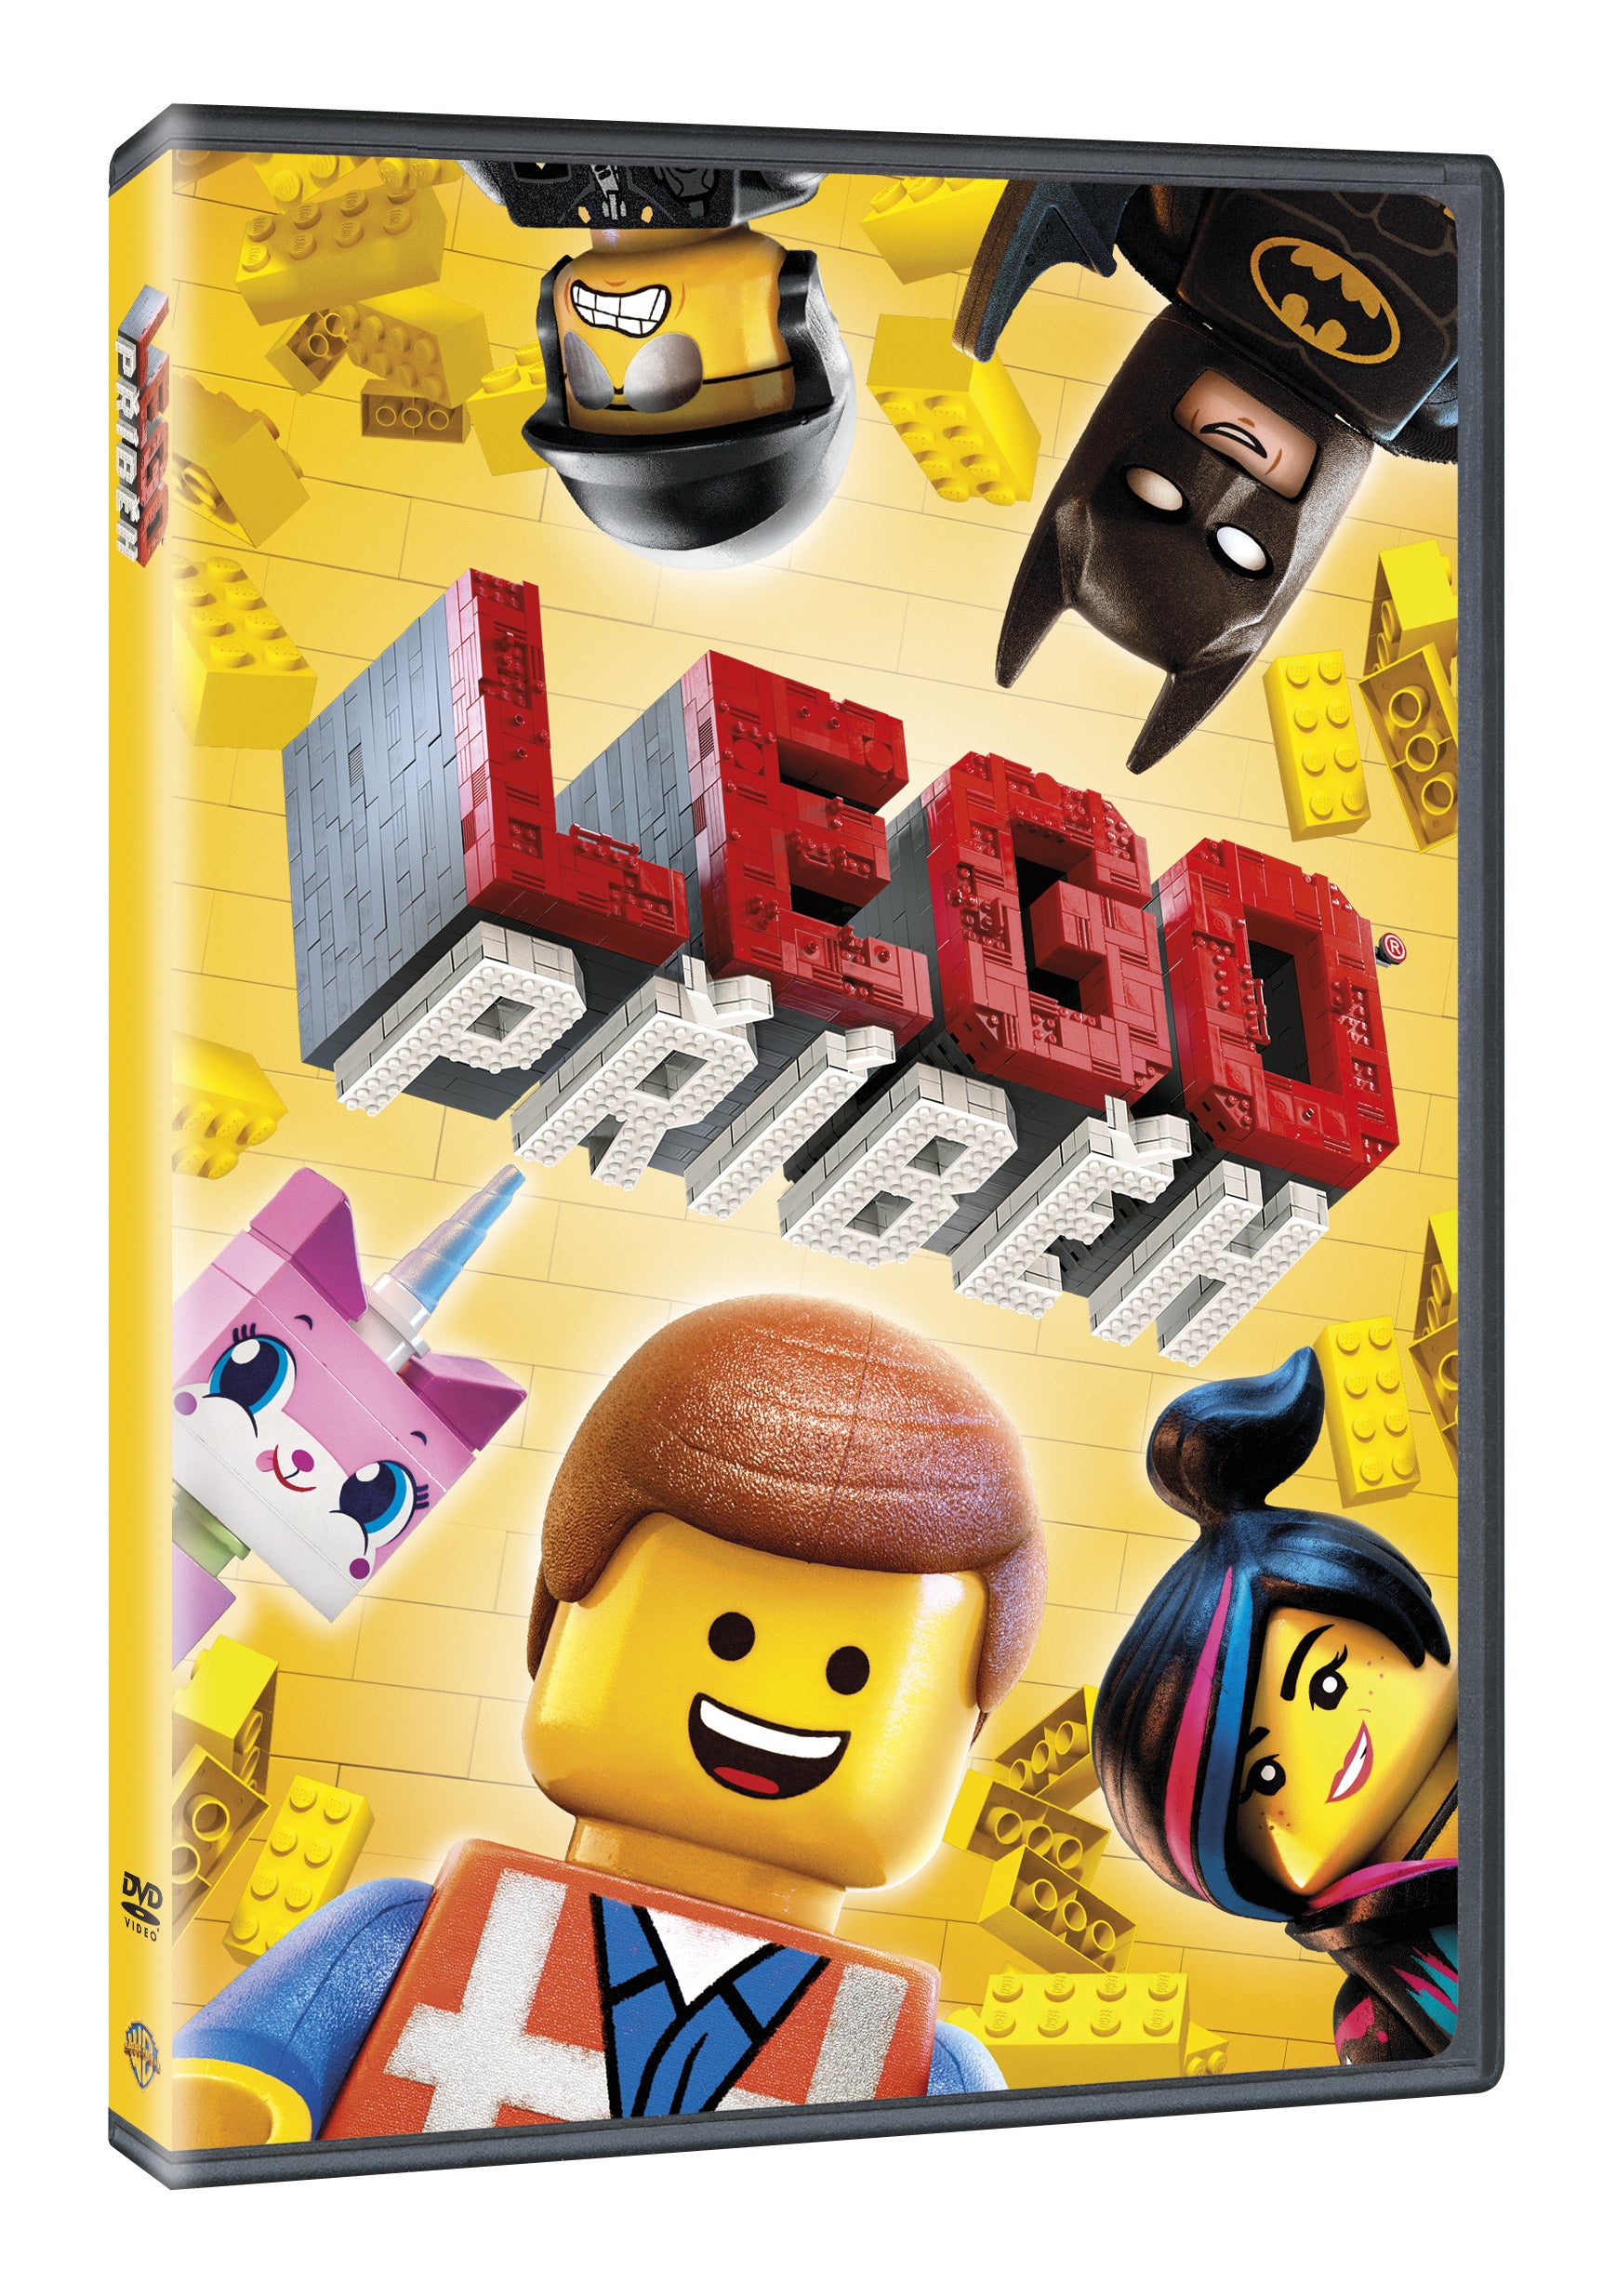 Lego-Pribeh-DVD / Der Lego-Film